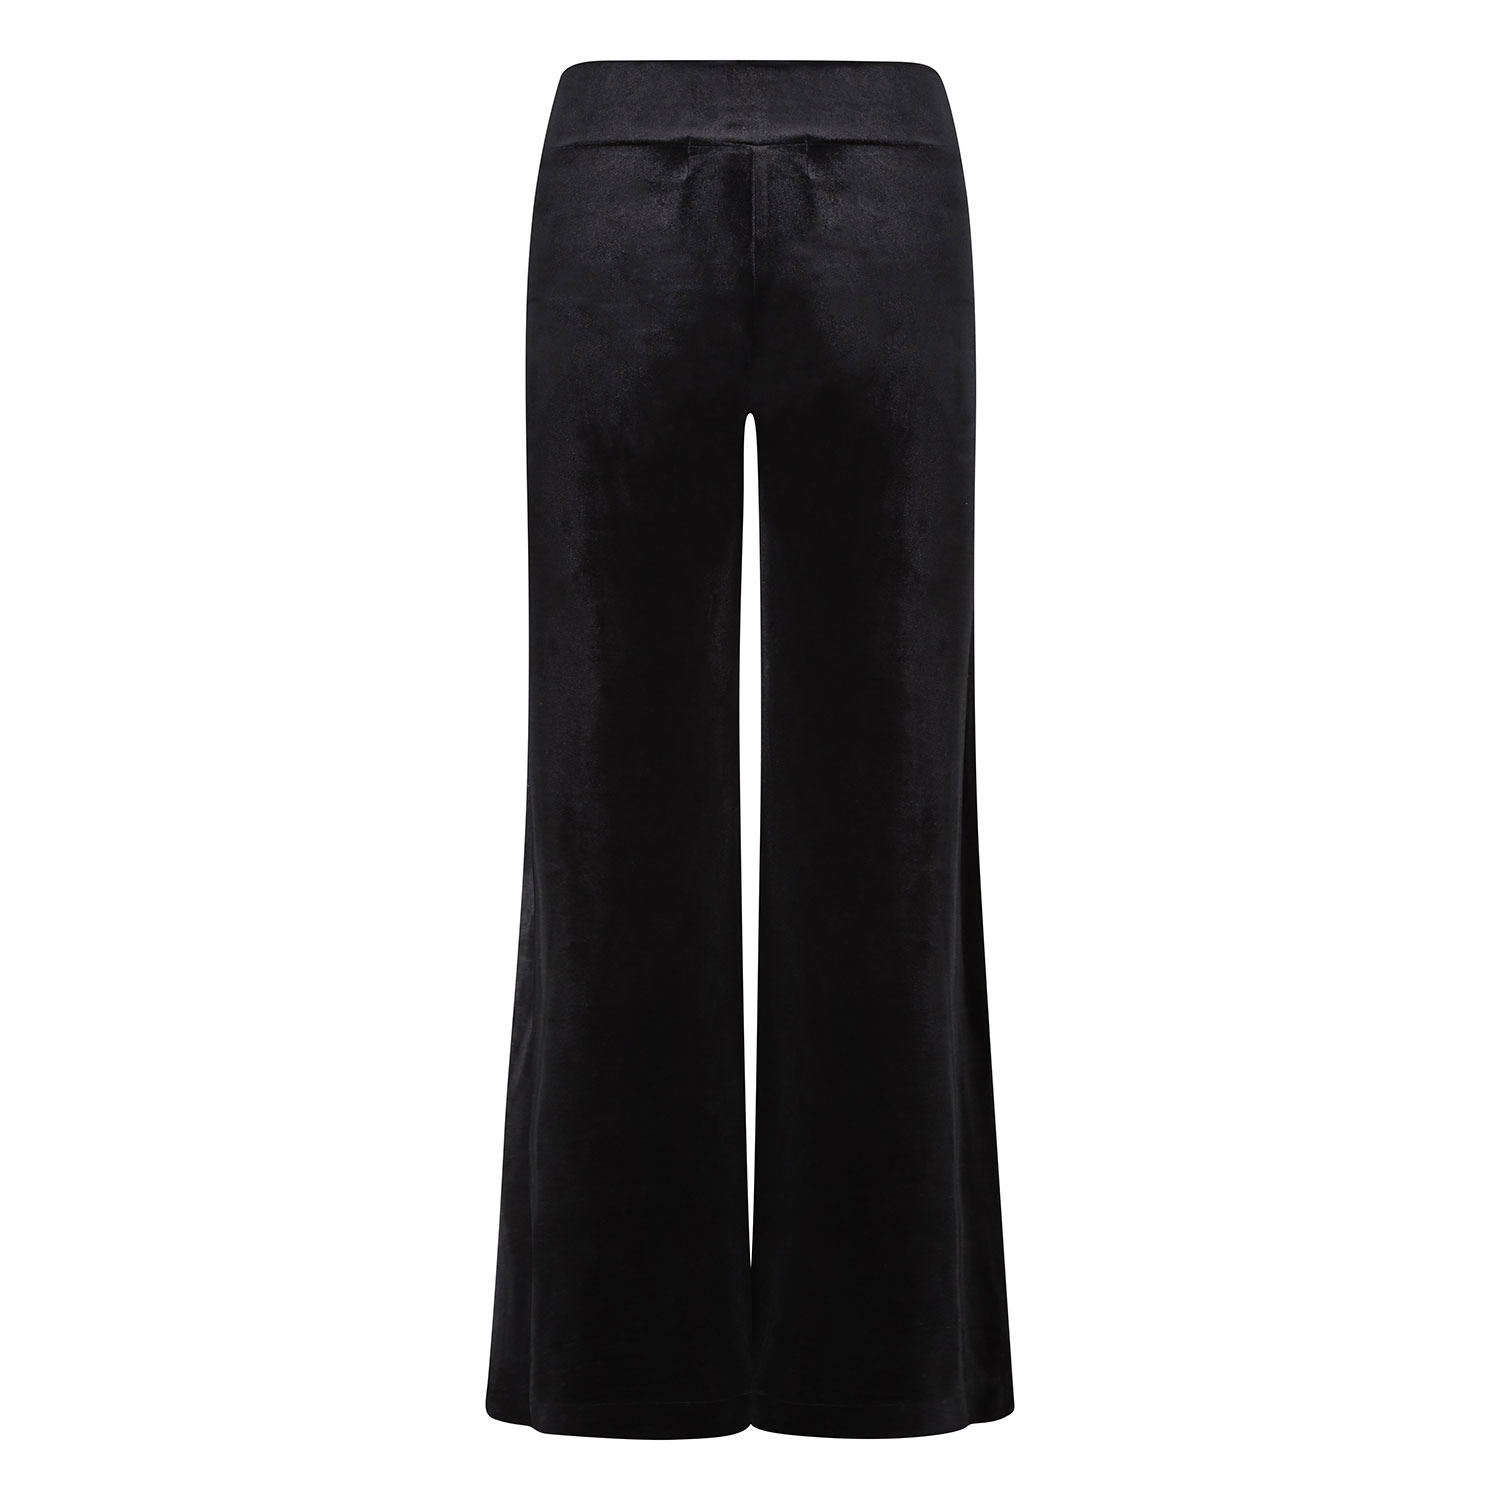 Beatrice Von Tresckow Women's Velvet Wide Flare Trousers - Black